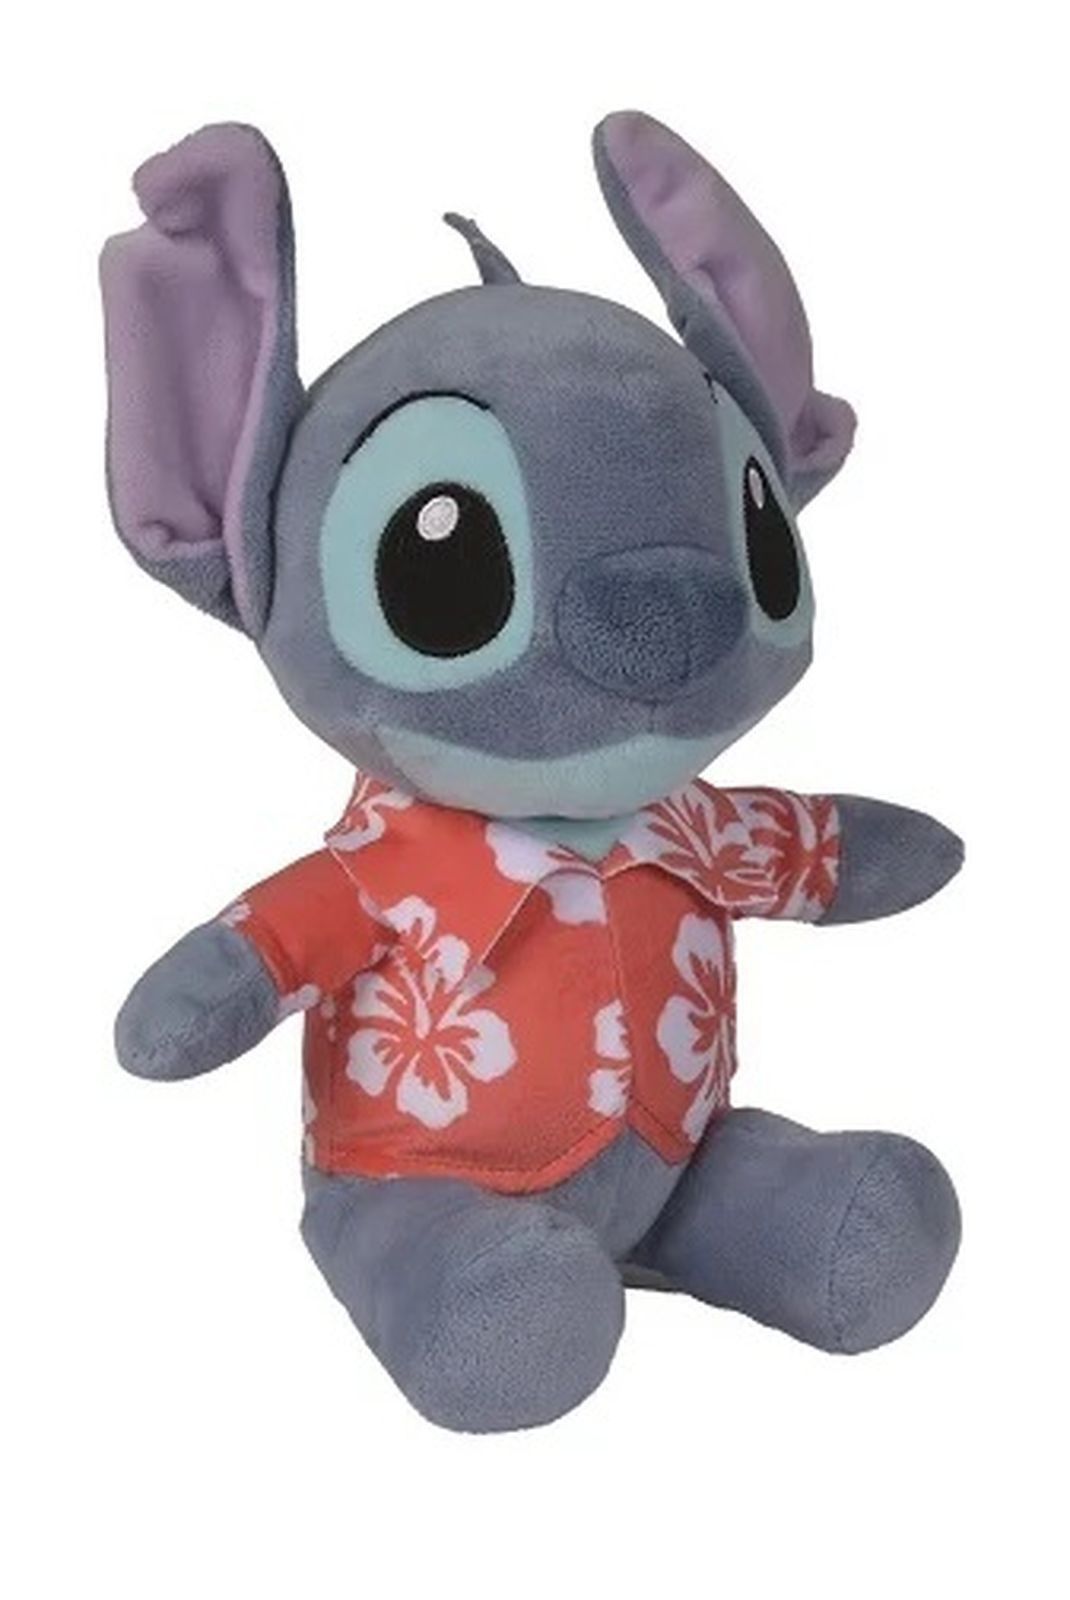 Peluche - Disney - Lilo & Stitch - Stitch Hawaii rouge - 25 cm - Simba